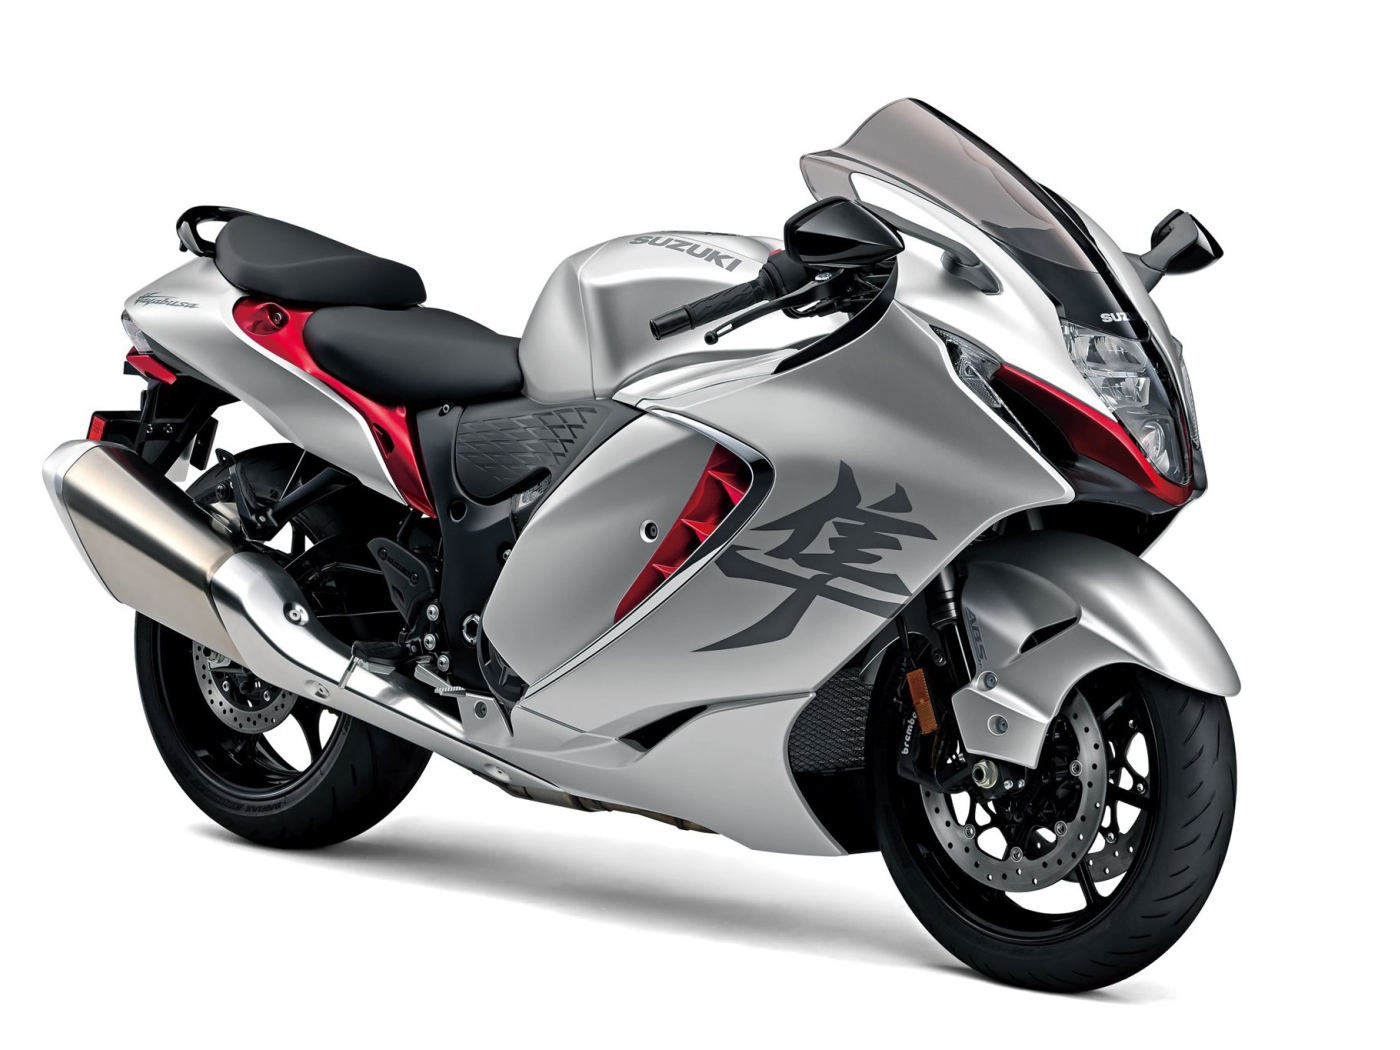 Gray 2021 Suzuki Hayabusa motorcycle against white background